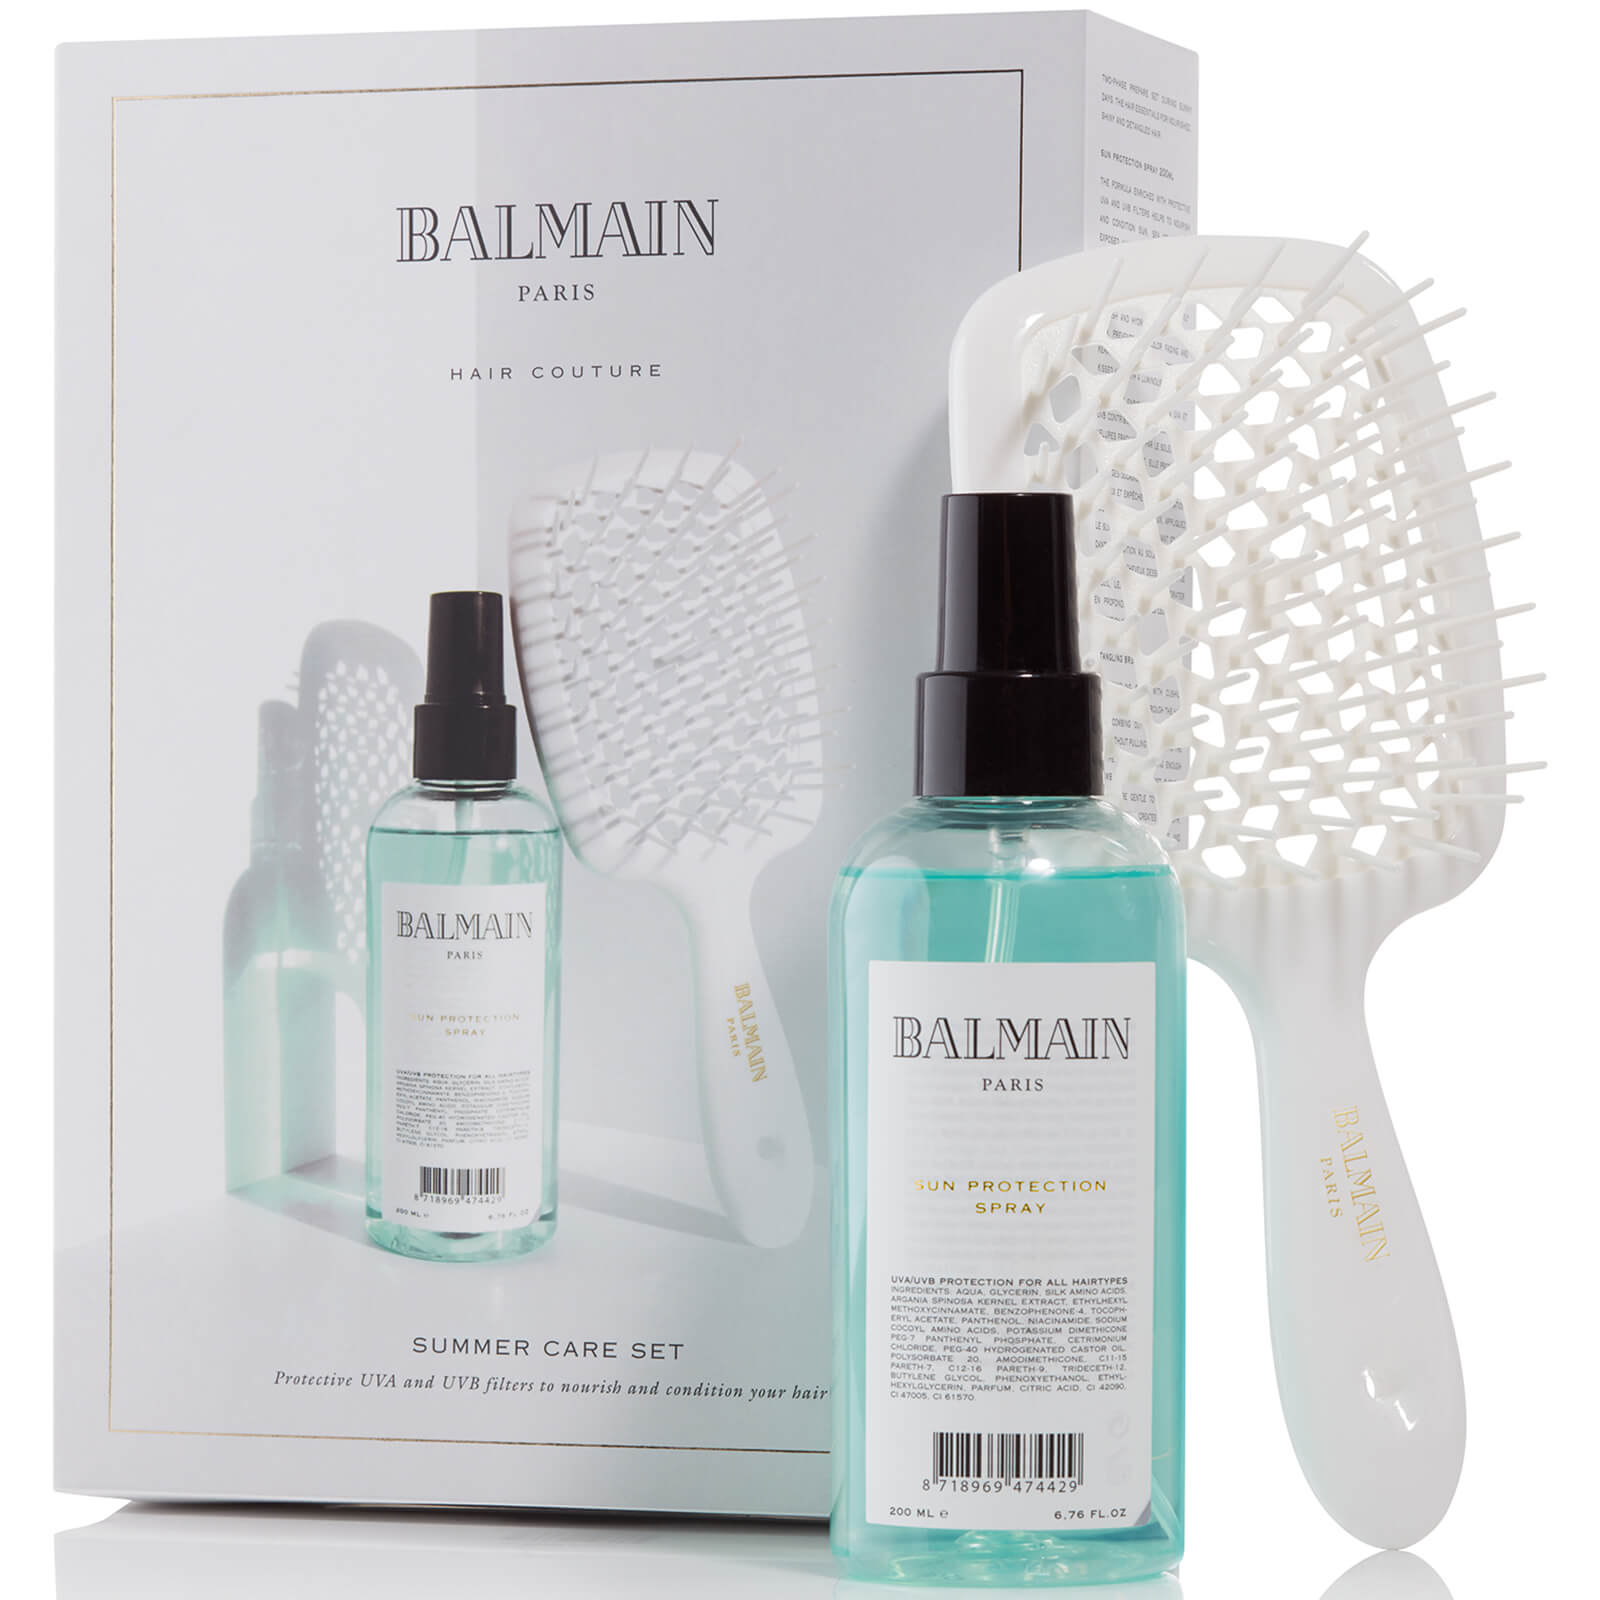 Balmain Summer Set 2018 (Includes Protection Detang Brush) from Balmain Paris Hair Couture | AccuWeather Shop